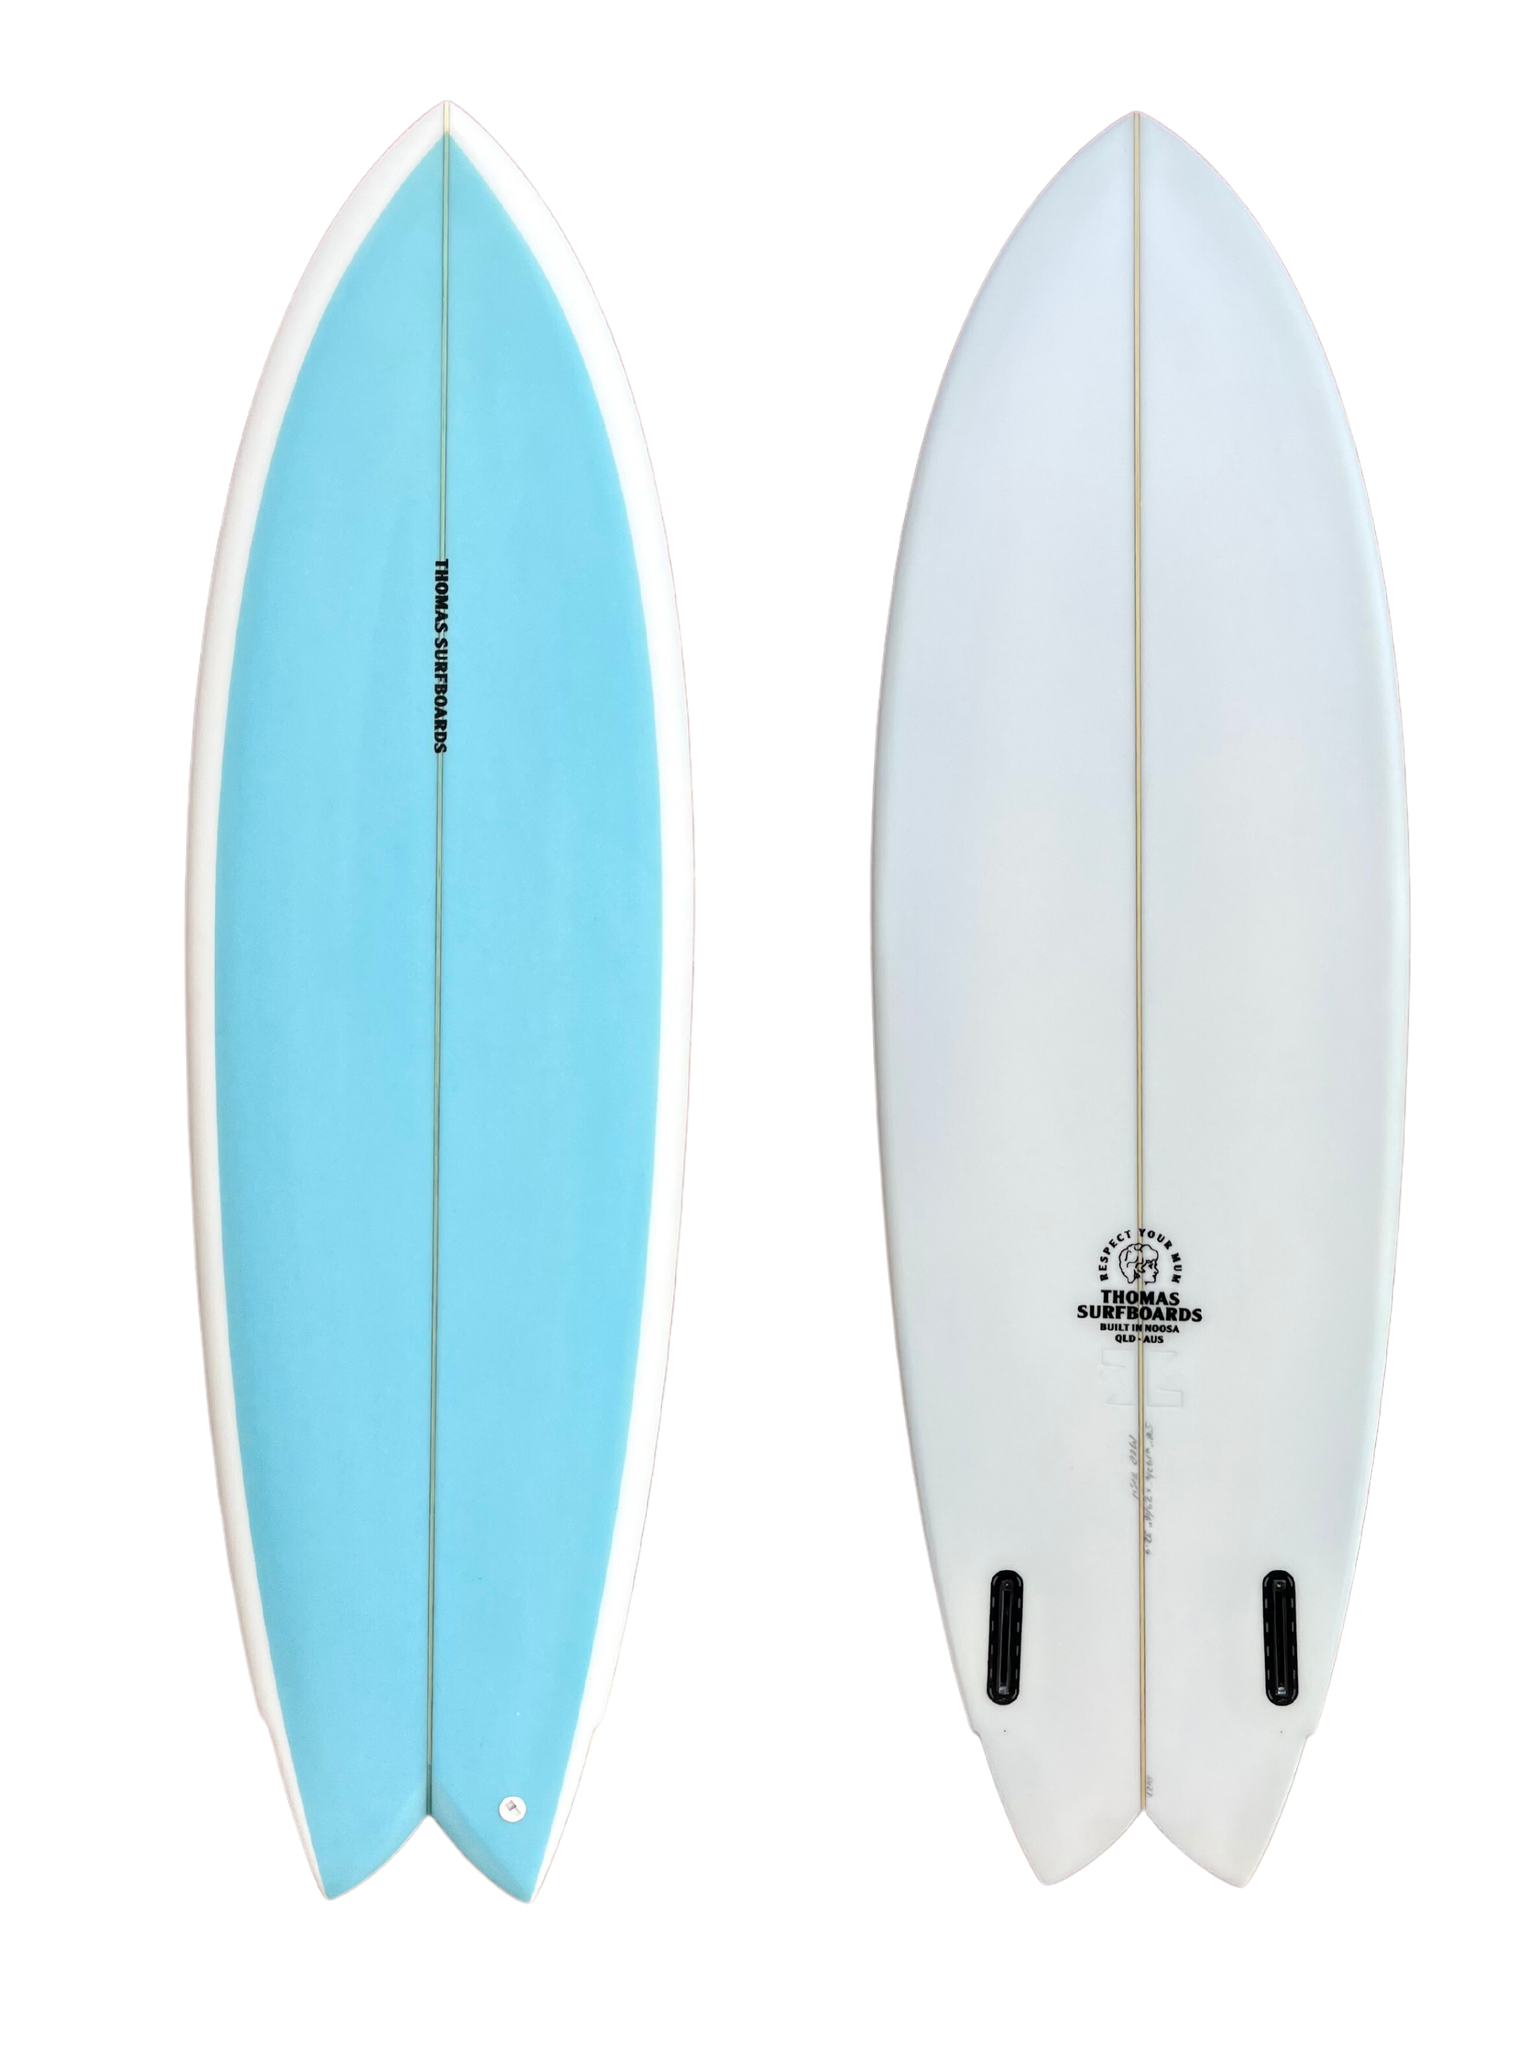 Thomas Bexton Surfboards Mod Fish 5'8"